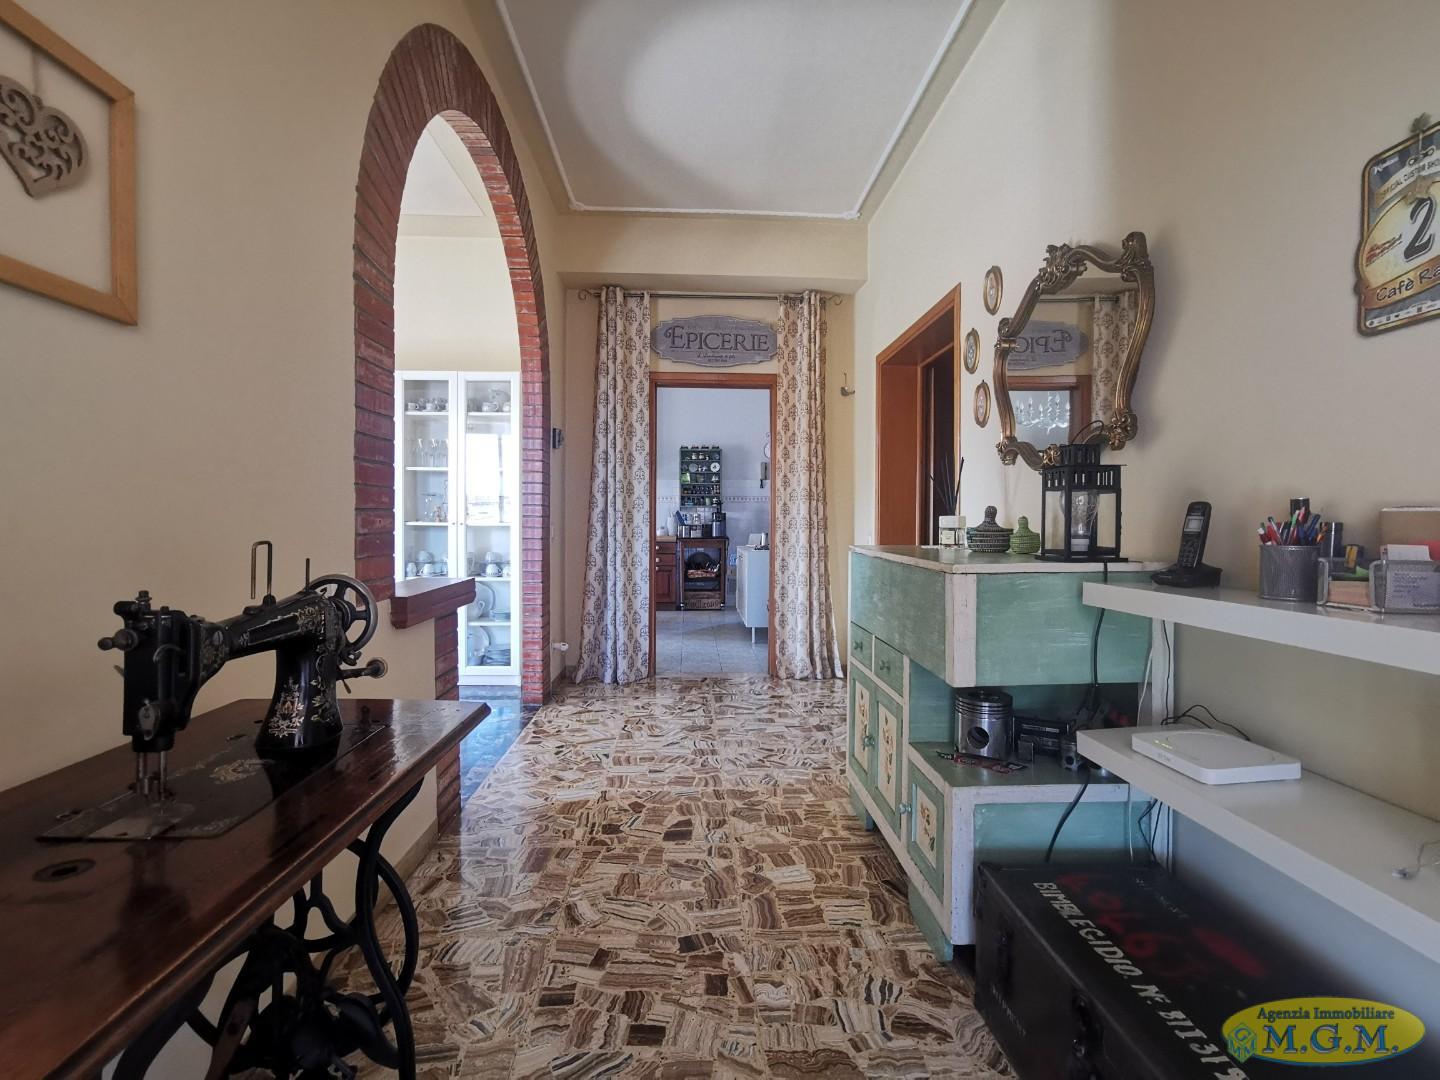 Mgmnet.it: Villa in vendita a Montopoli in Val d'Arno